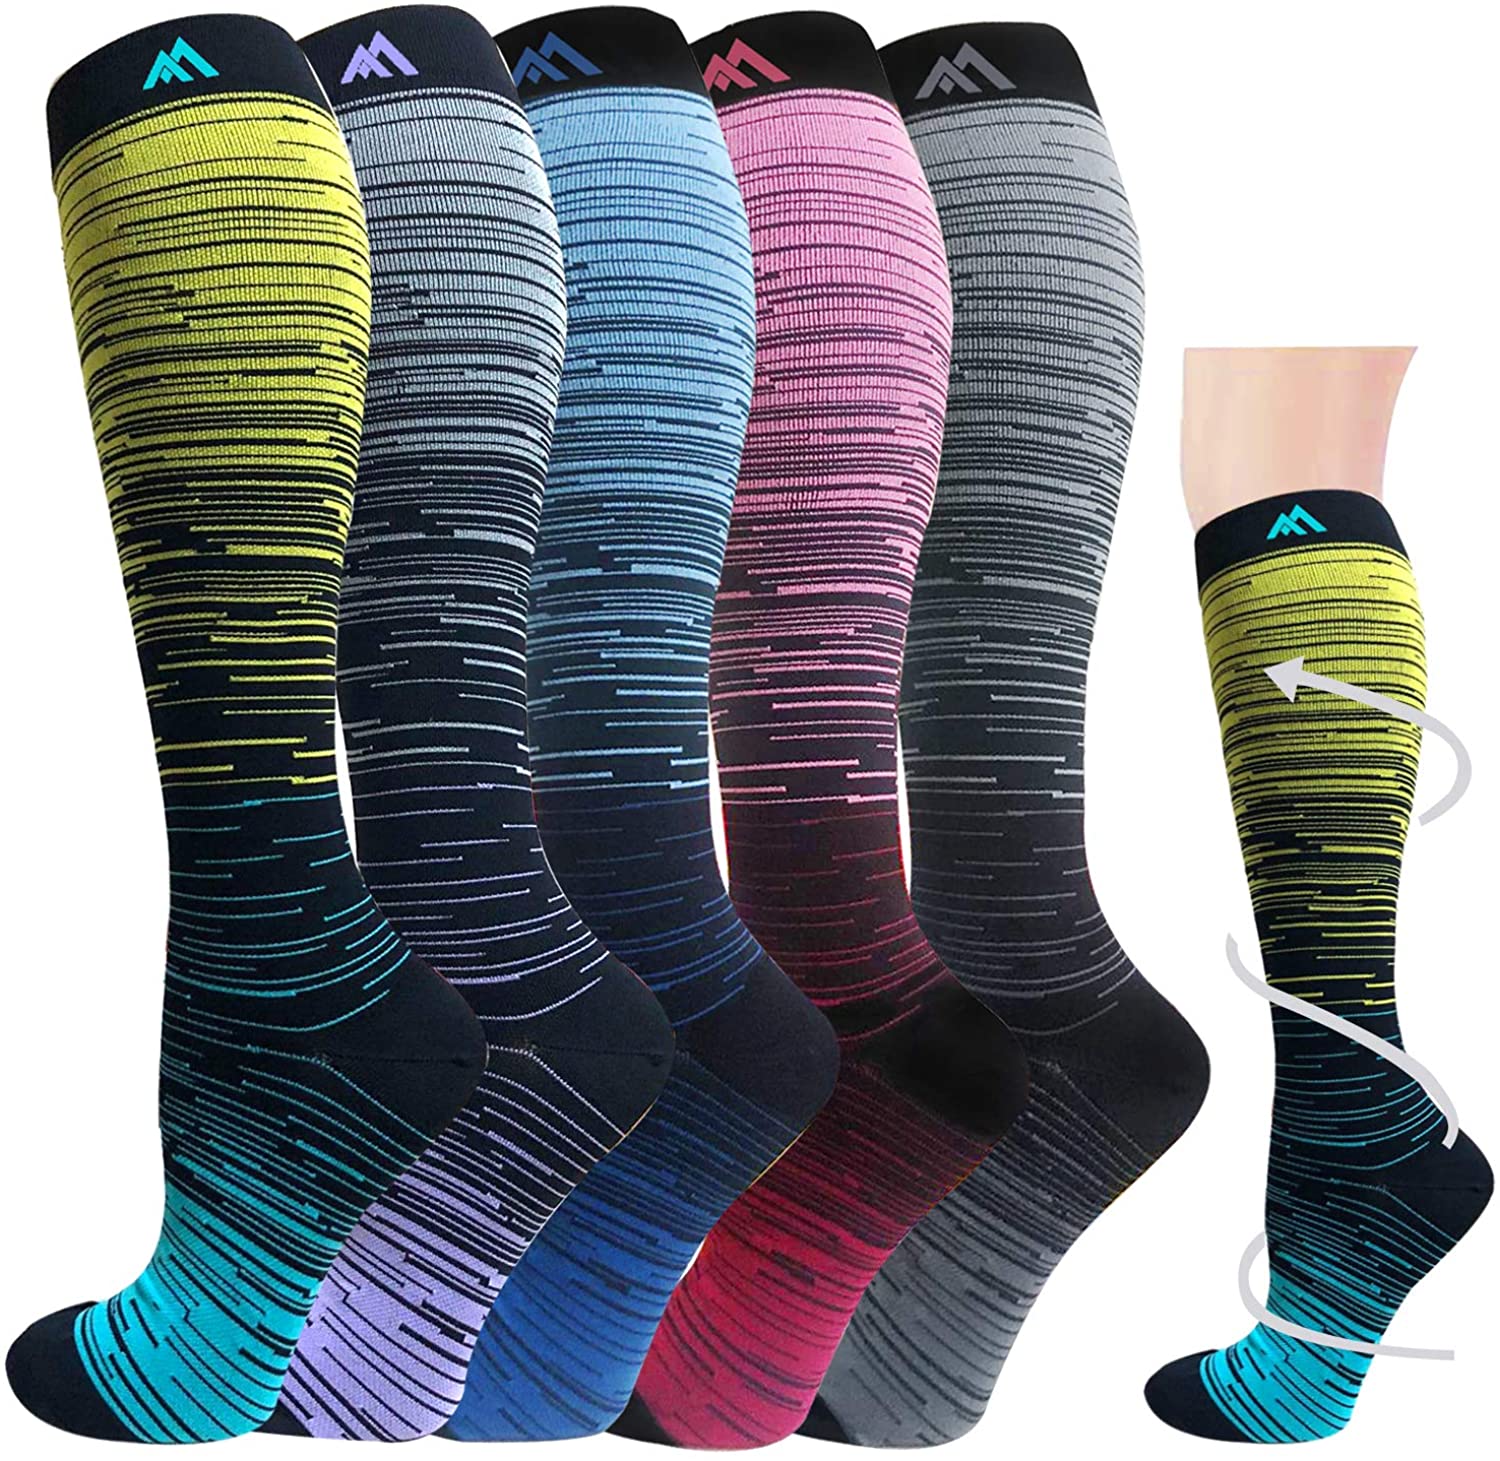 Graduated Medical Compression Socks for Women&Men 20-30mmhg Knee High Sock  | eBay